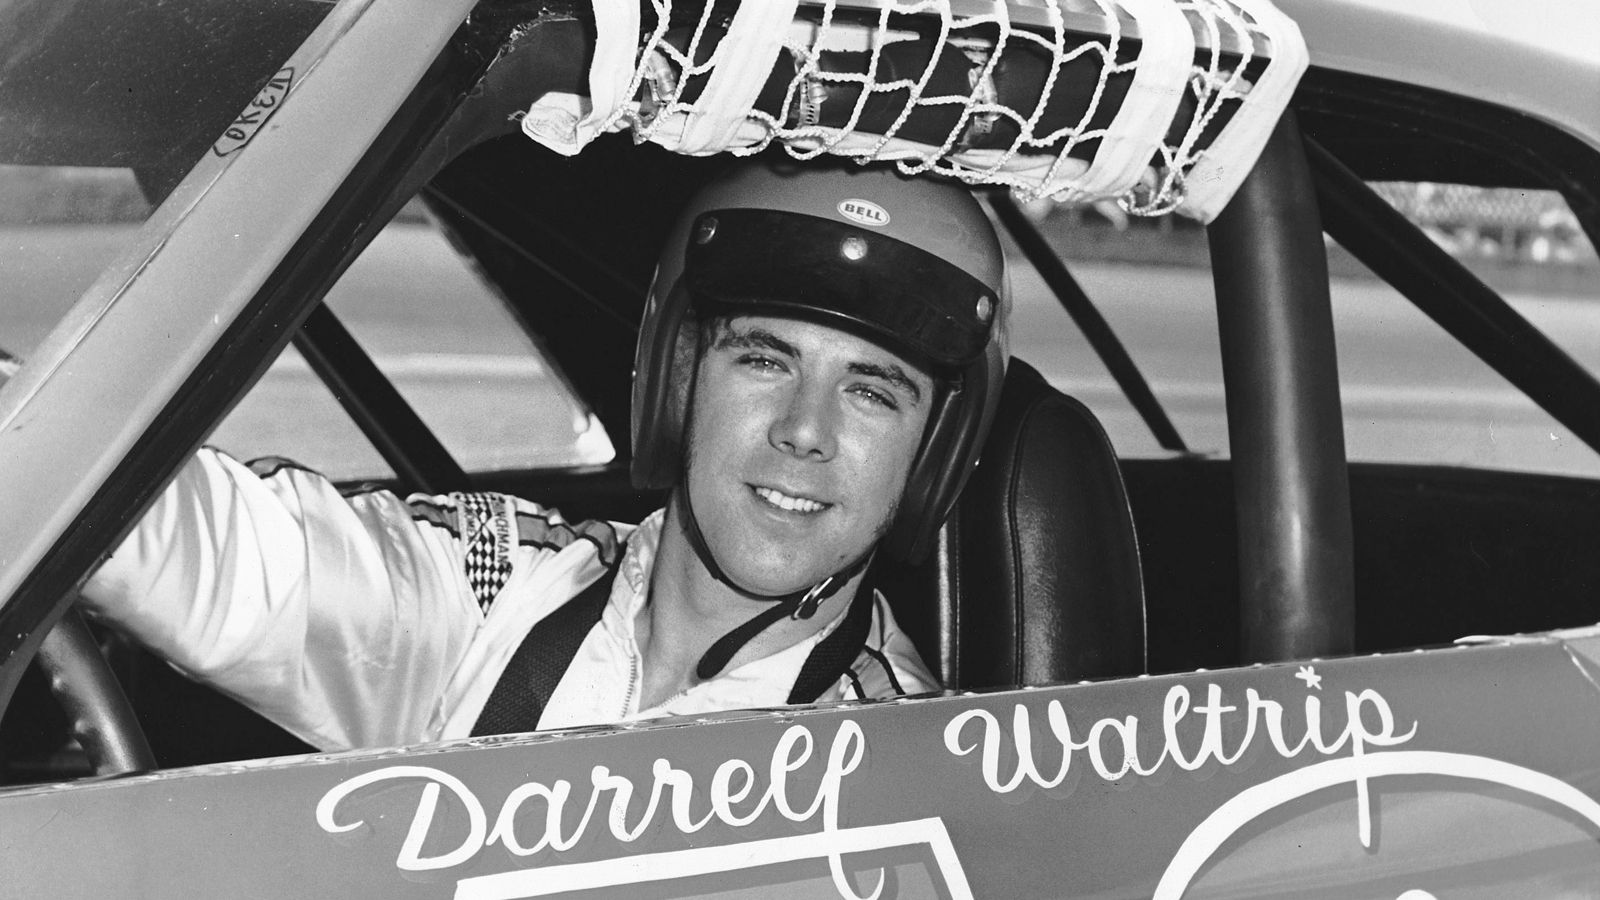 Calling it a career NASCAR, Fox TV legend Darrell Waltrips amazing racing life